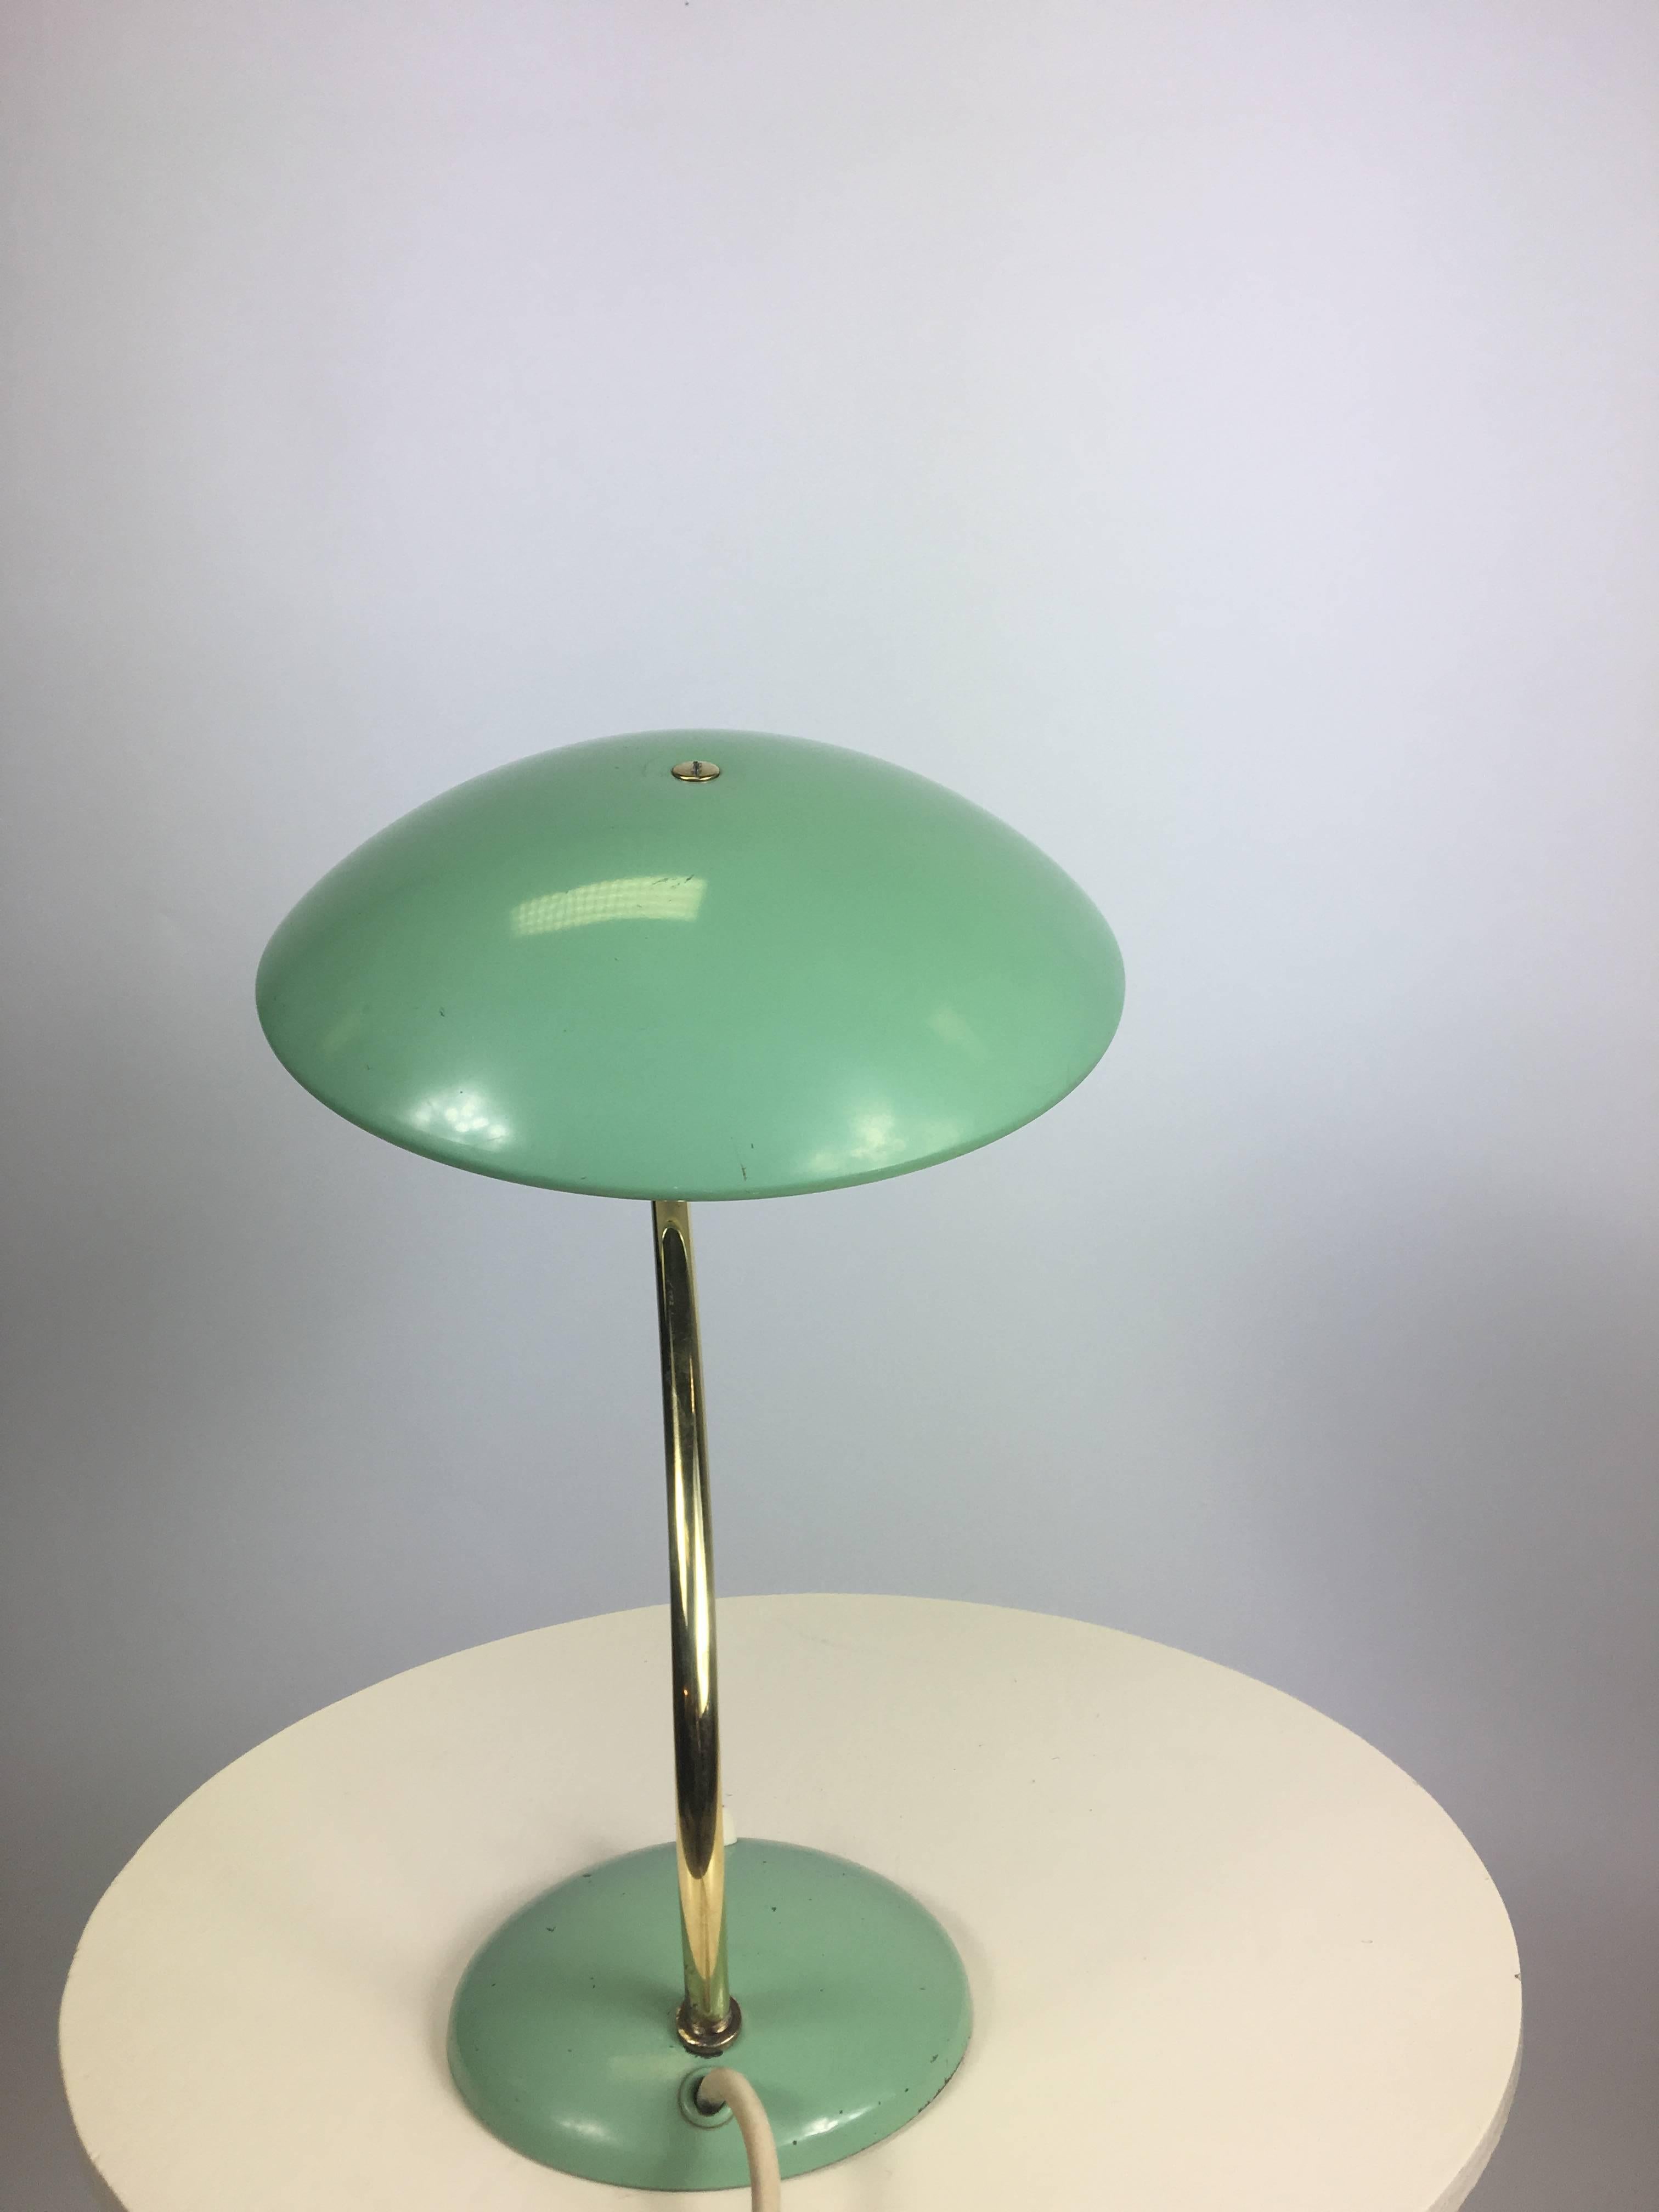 mint green desk lamp